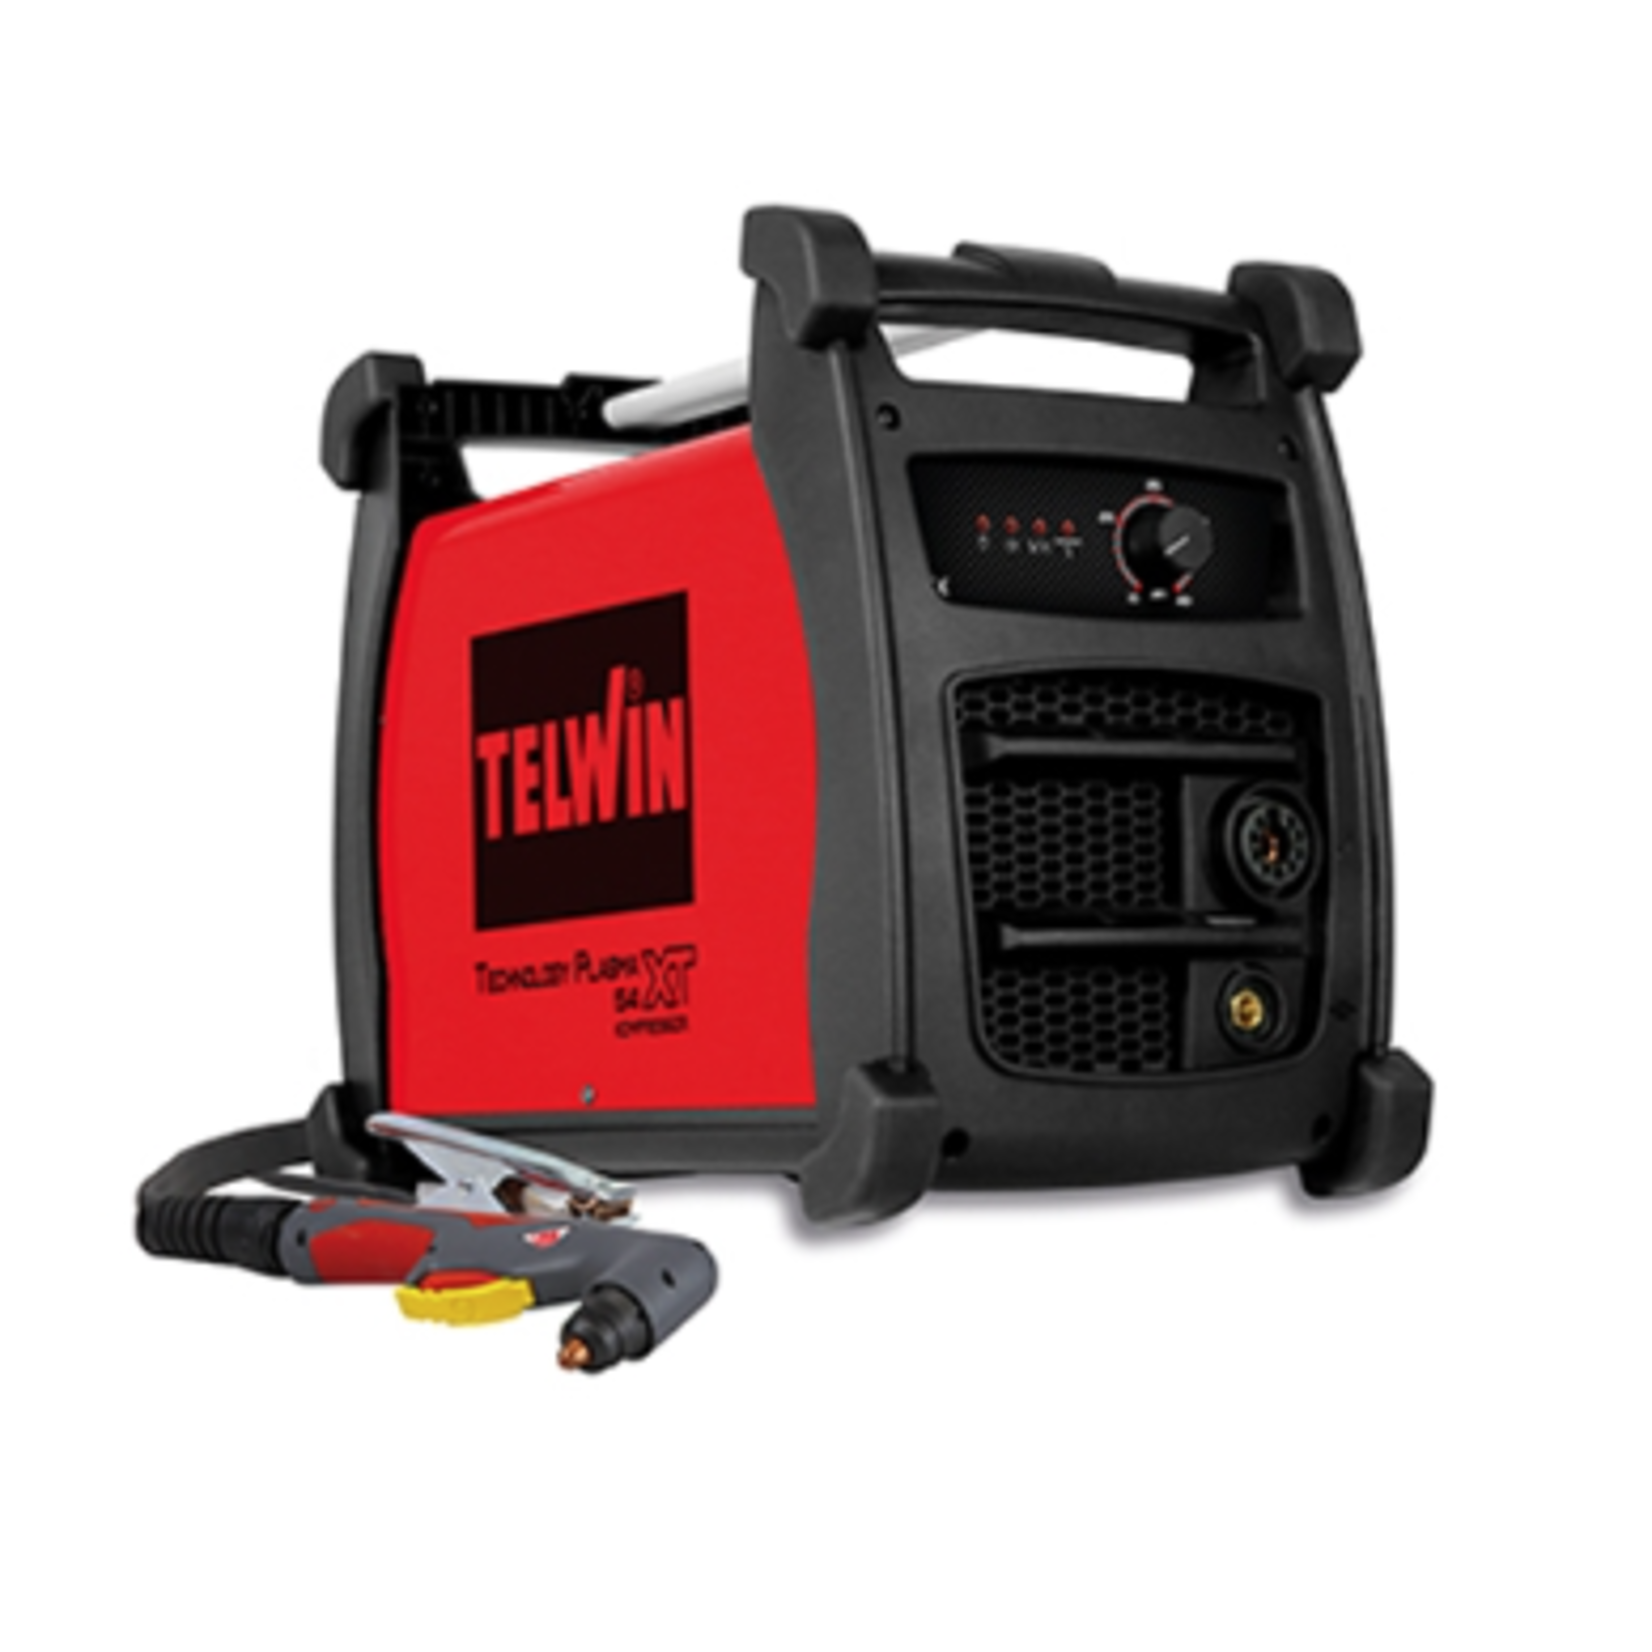 Telwin TECHNOLOGY PLASMA 60 XT 230V